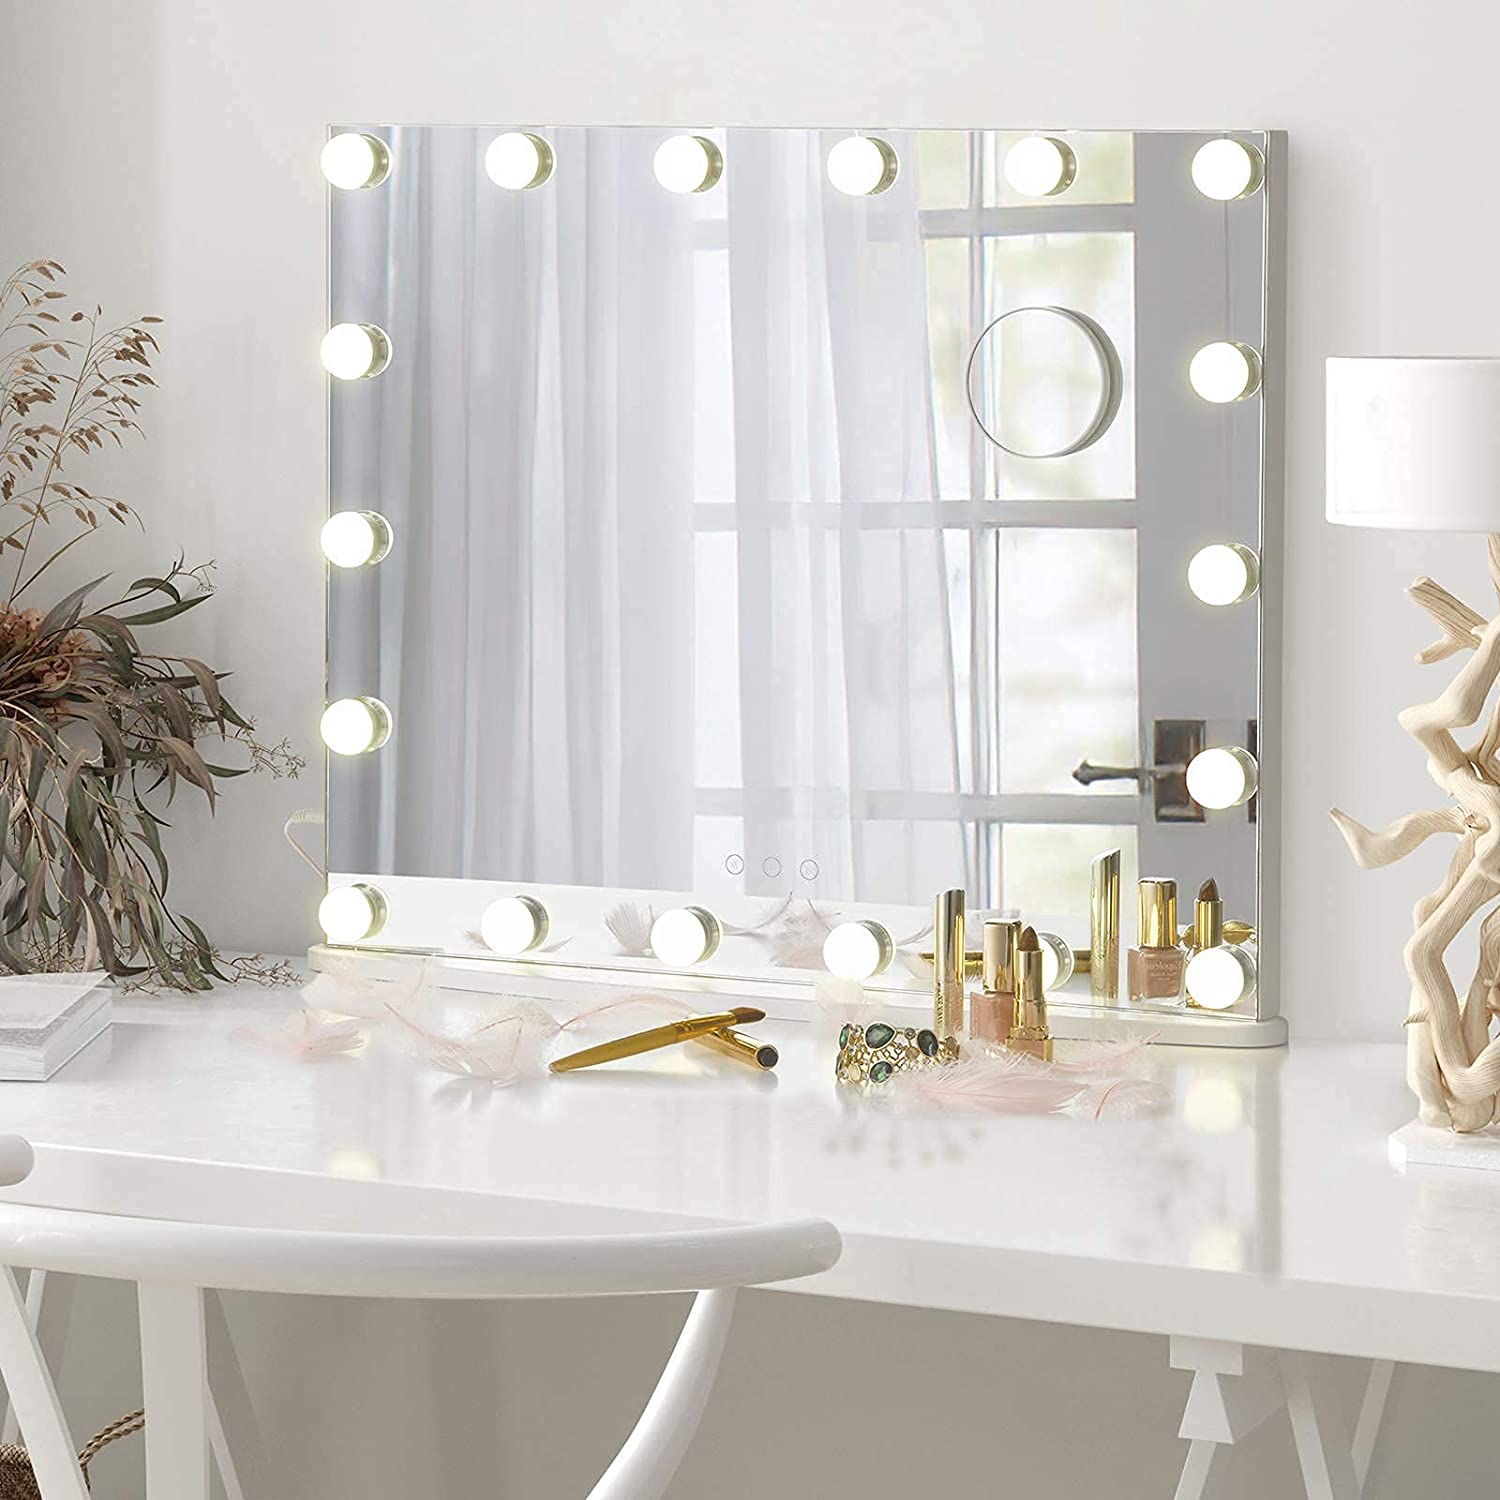 Clara Hollywood Vanity Mirror with Lights